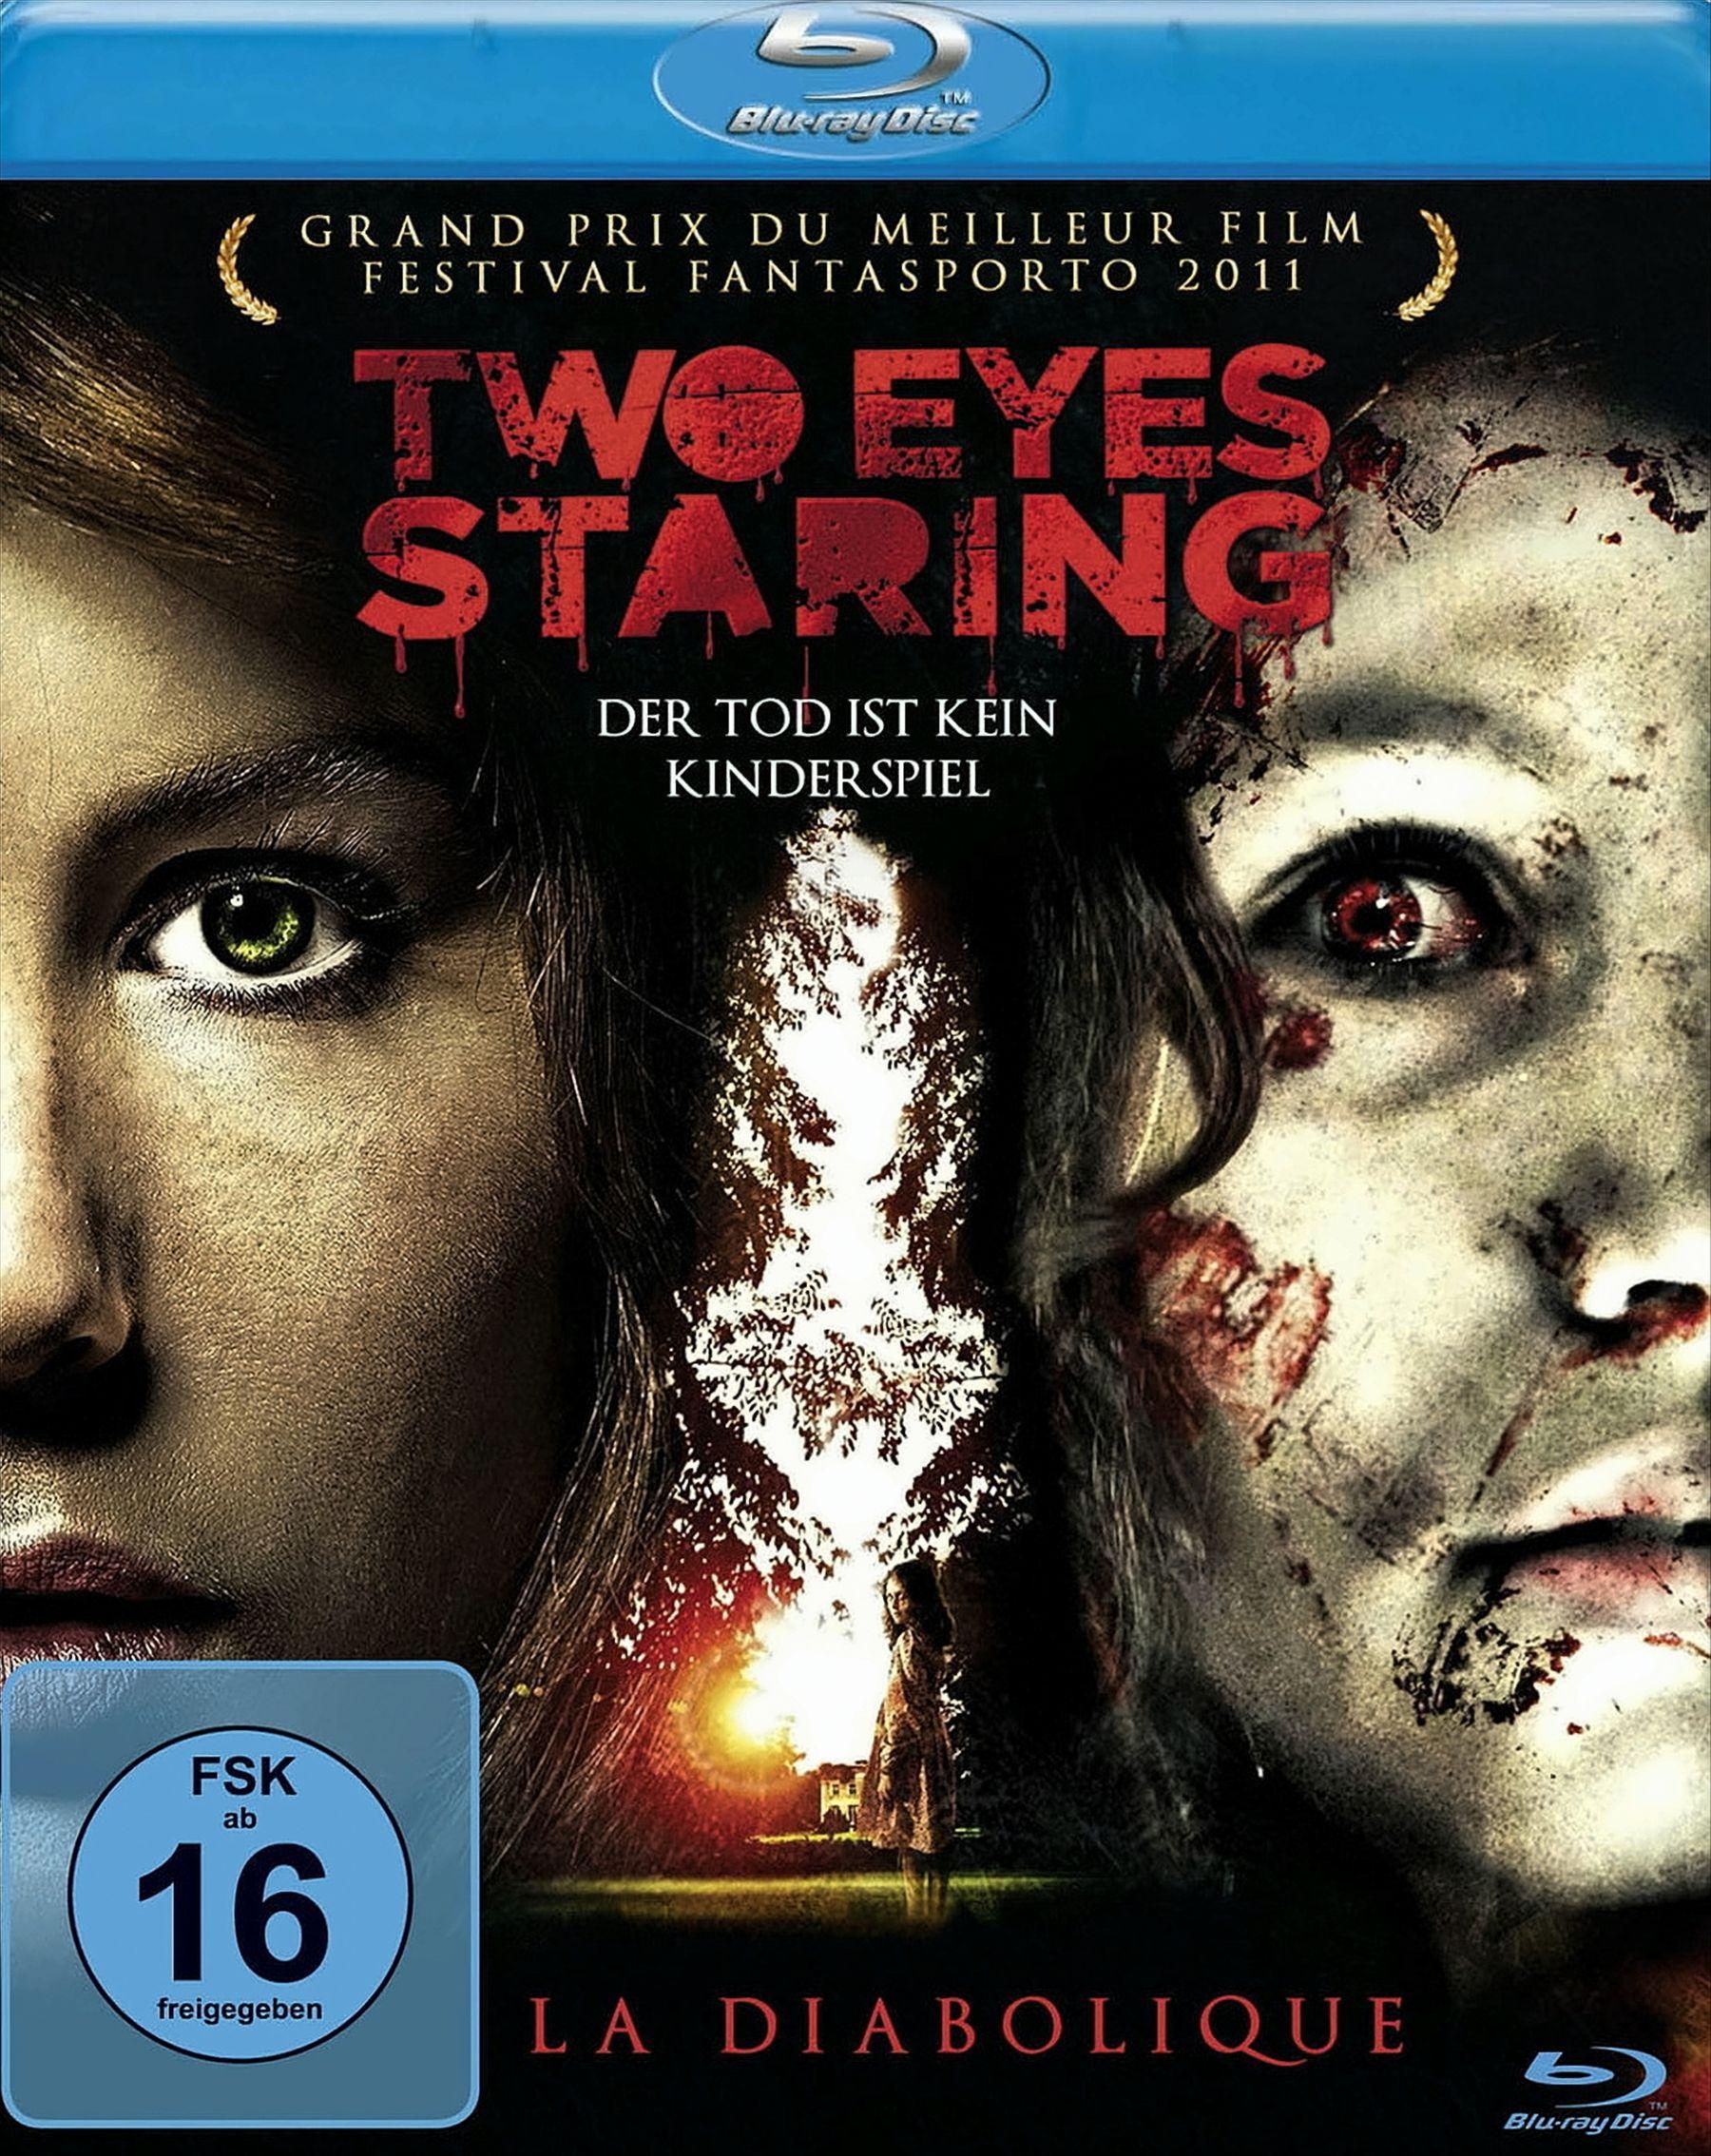 Two Eyes Staring - Der Blu-ray Kinderspiel ist Tod kein